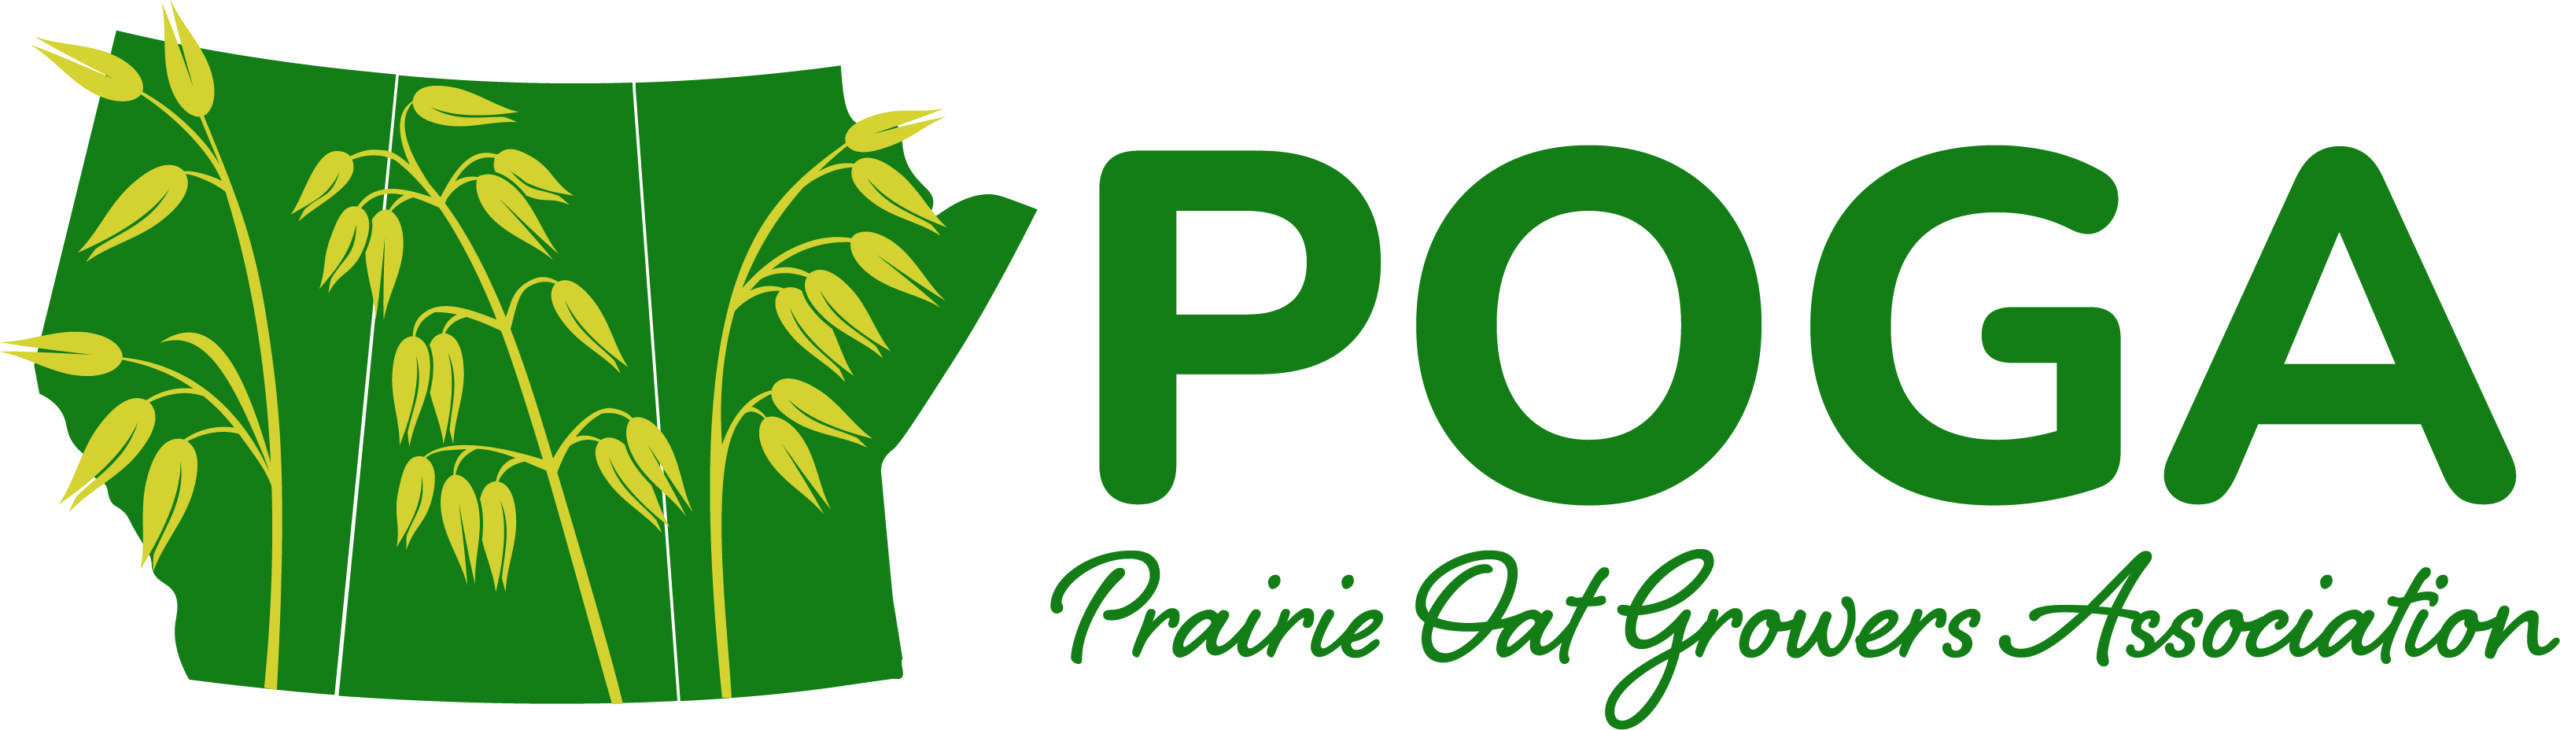 Prairie Oat Growers Association